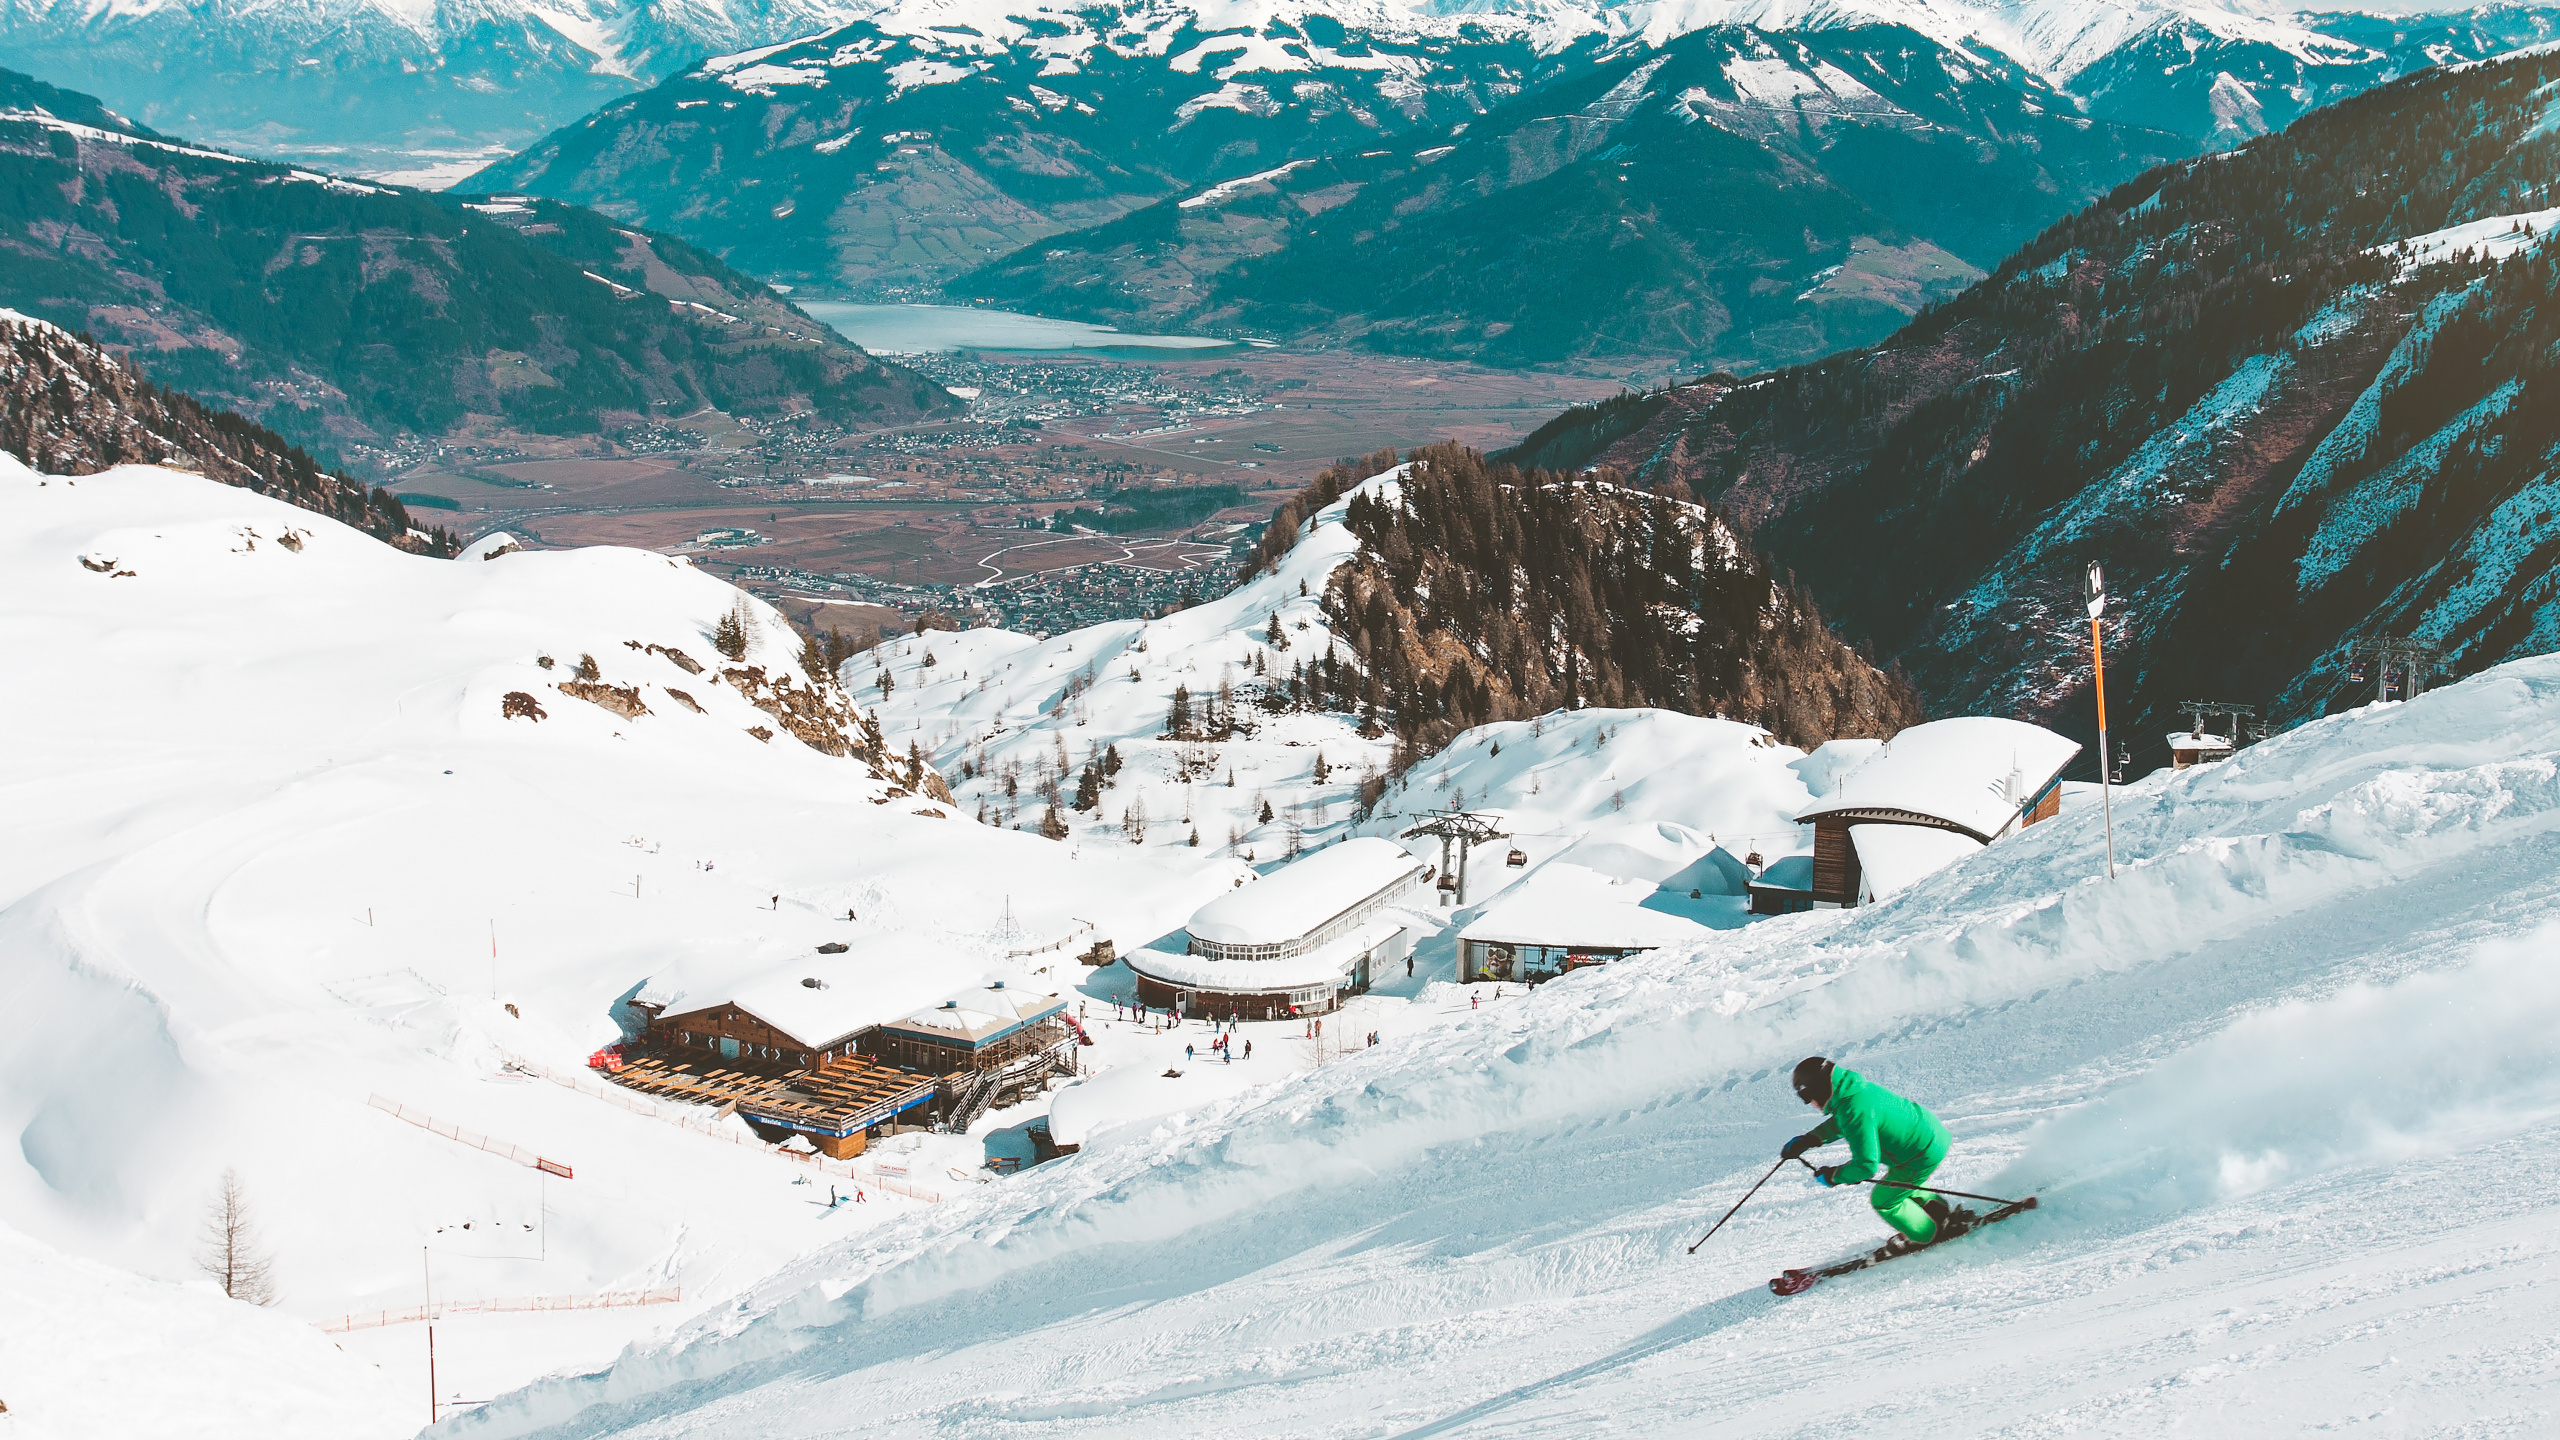 Station de Ski, Ski, Resort, Neige, Les Reliefs Montagneux. Wallpaper in 2560x1440 Resolution